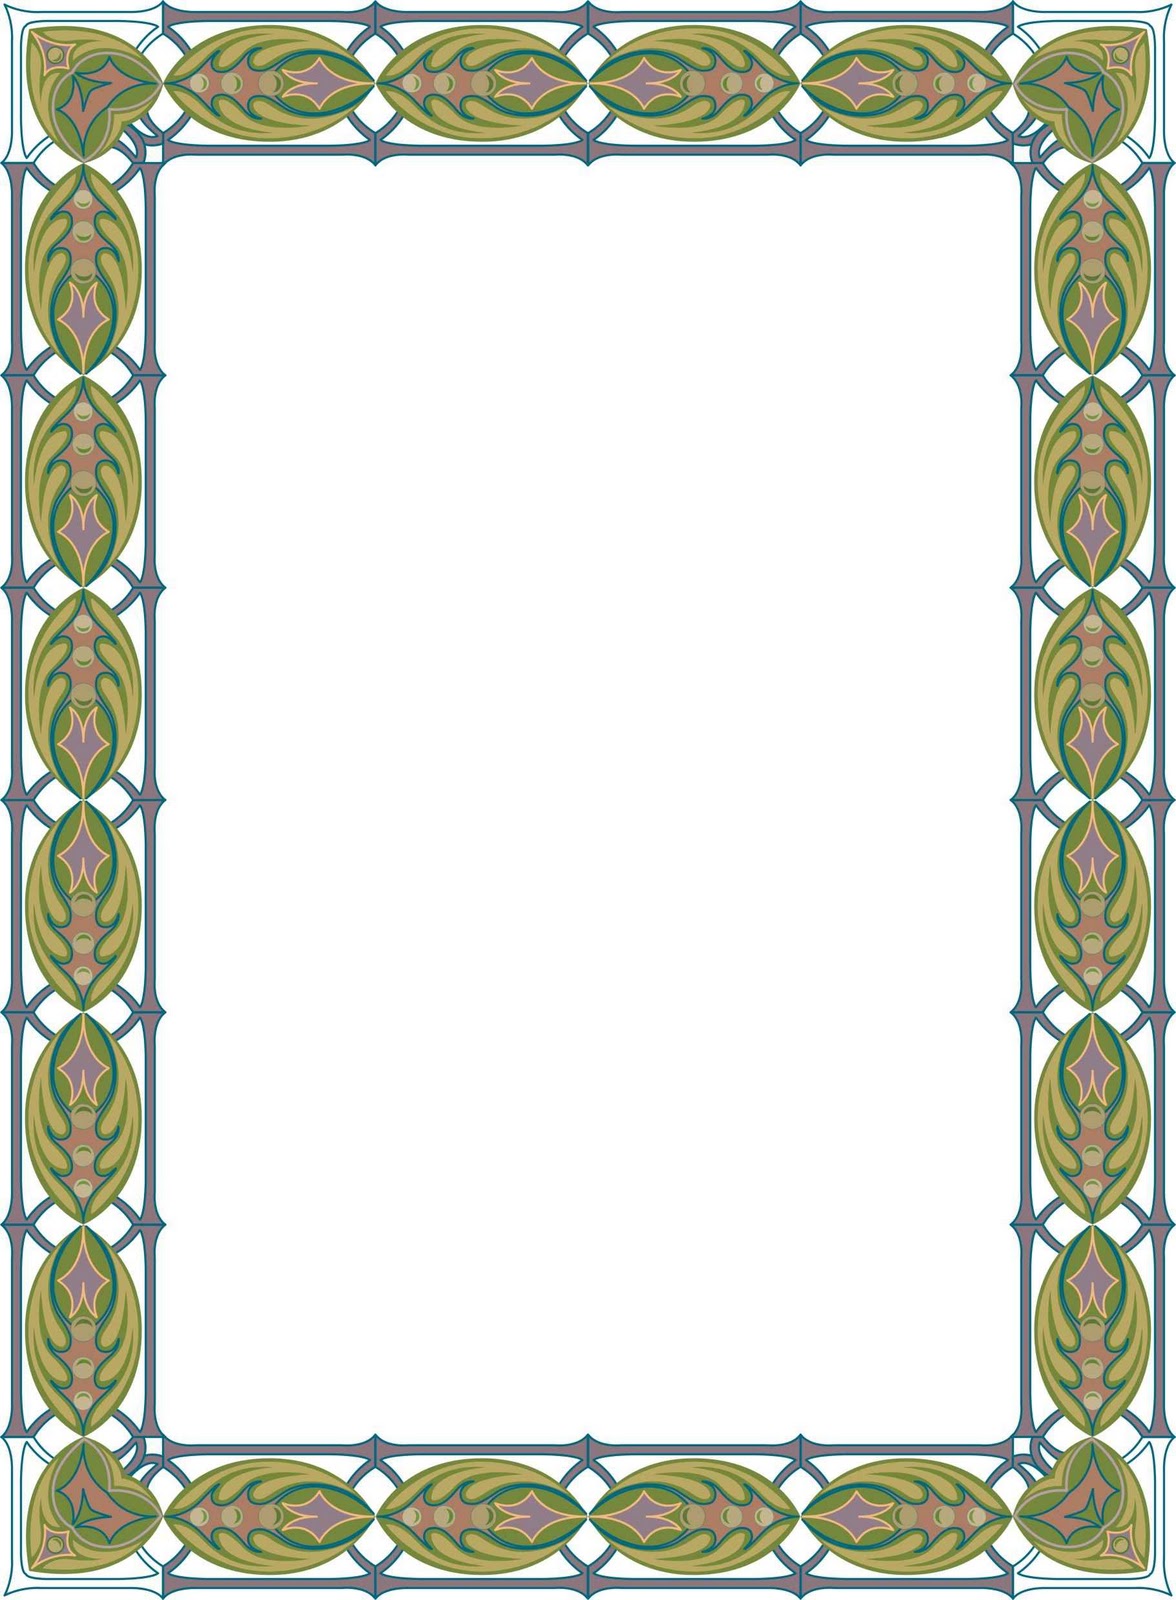 Bingkai / Border Piagam Vector (3) Banua Sablon jpg (1176x1600)